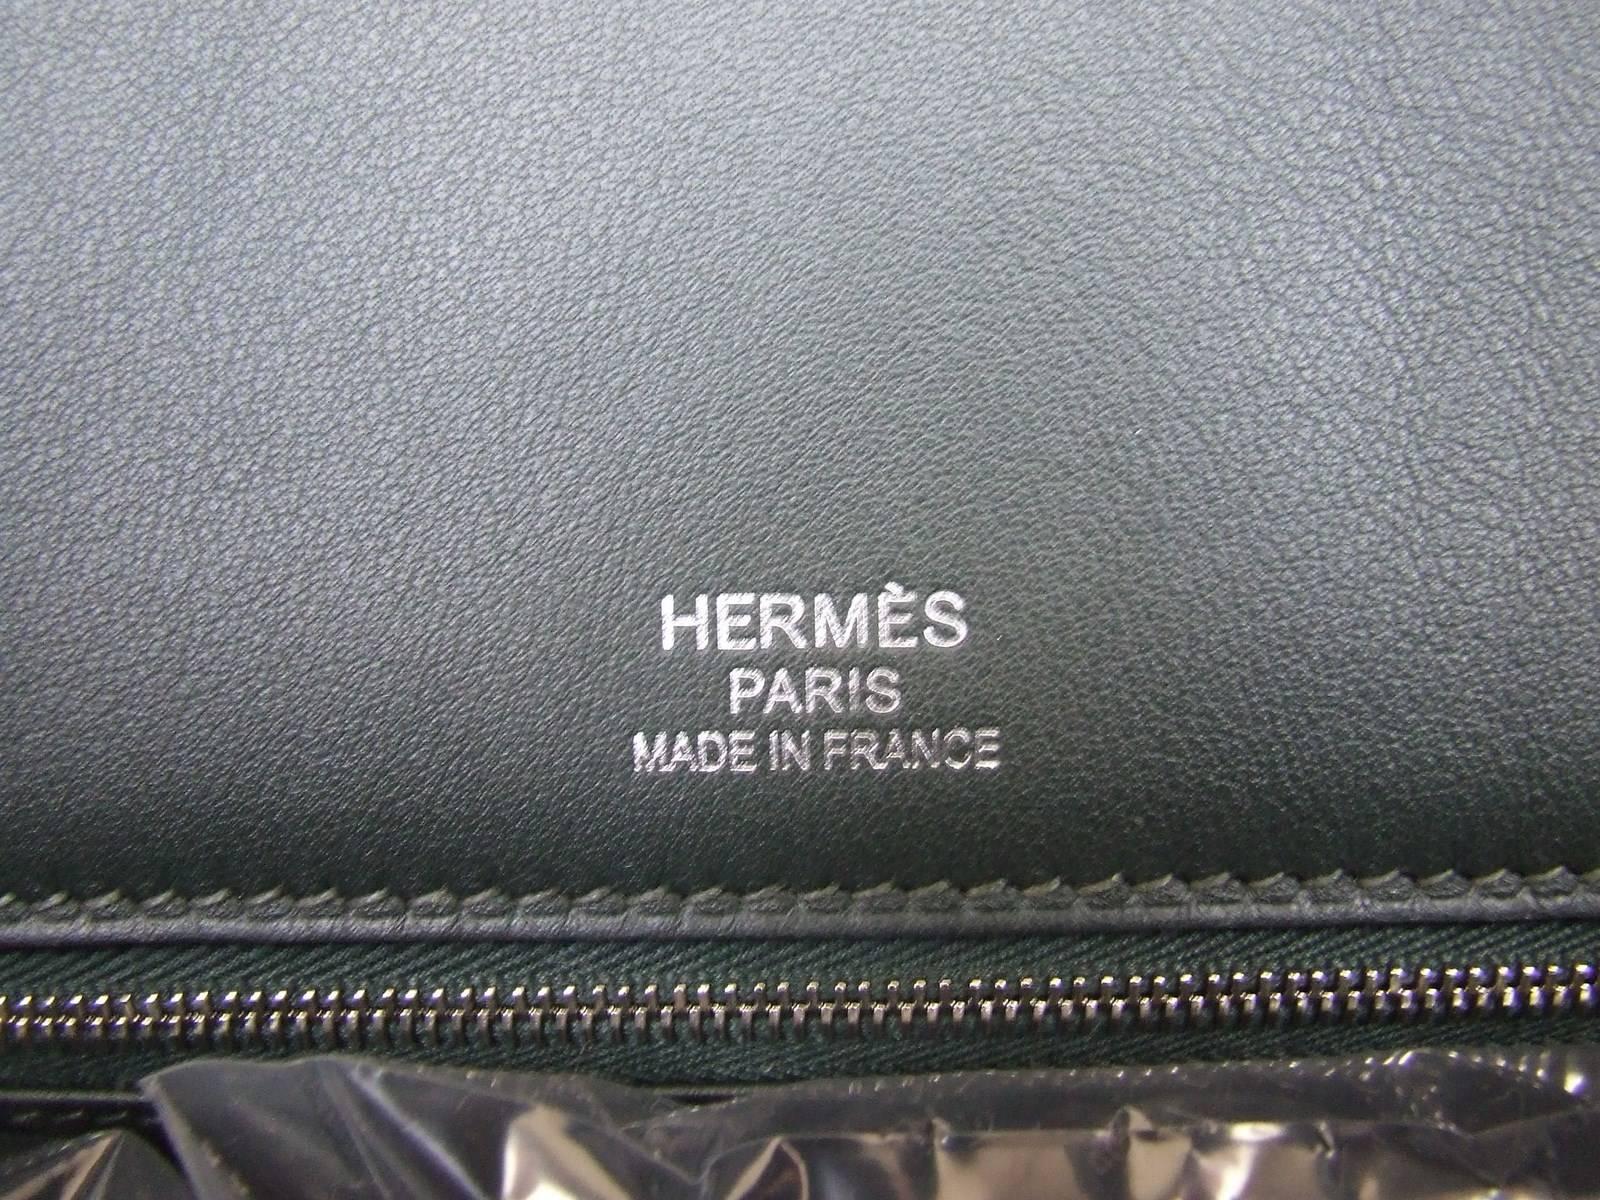 Women's RARE Hermes Birkin Bag Toile Riga Veau Swift Leather Beige Dark Green 35 cm BNIB